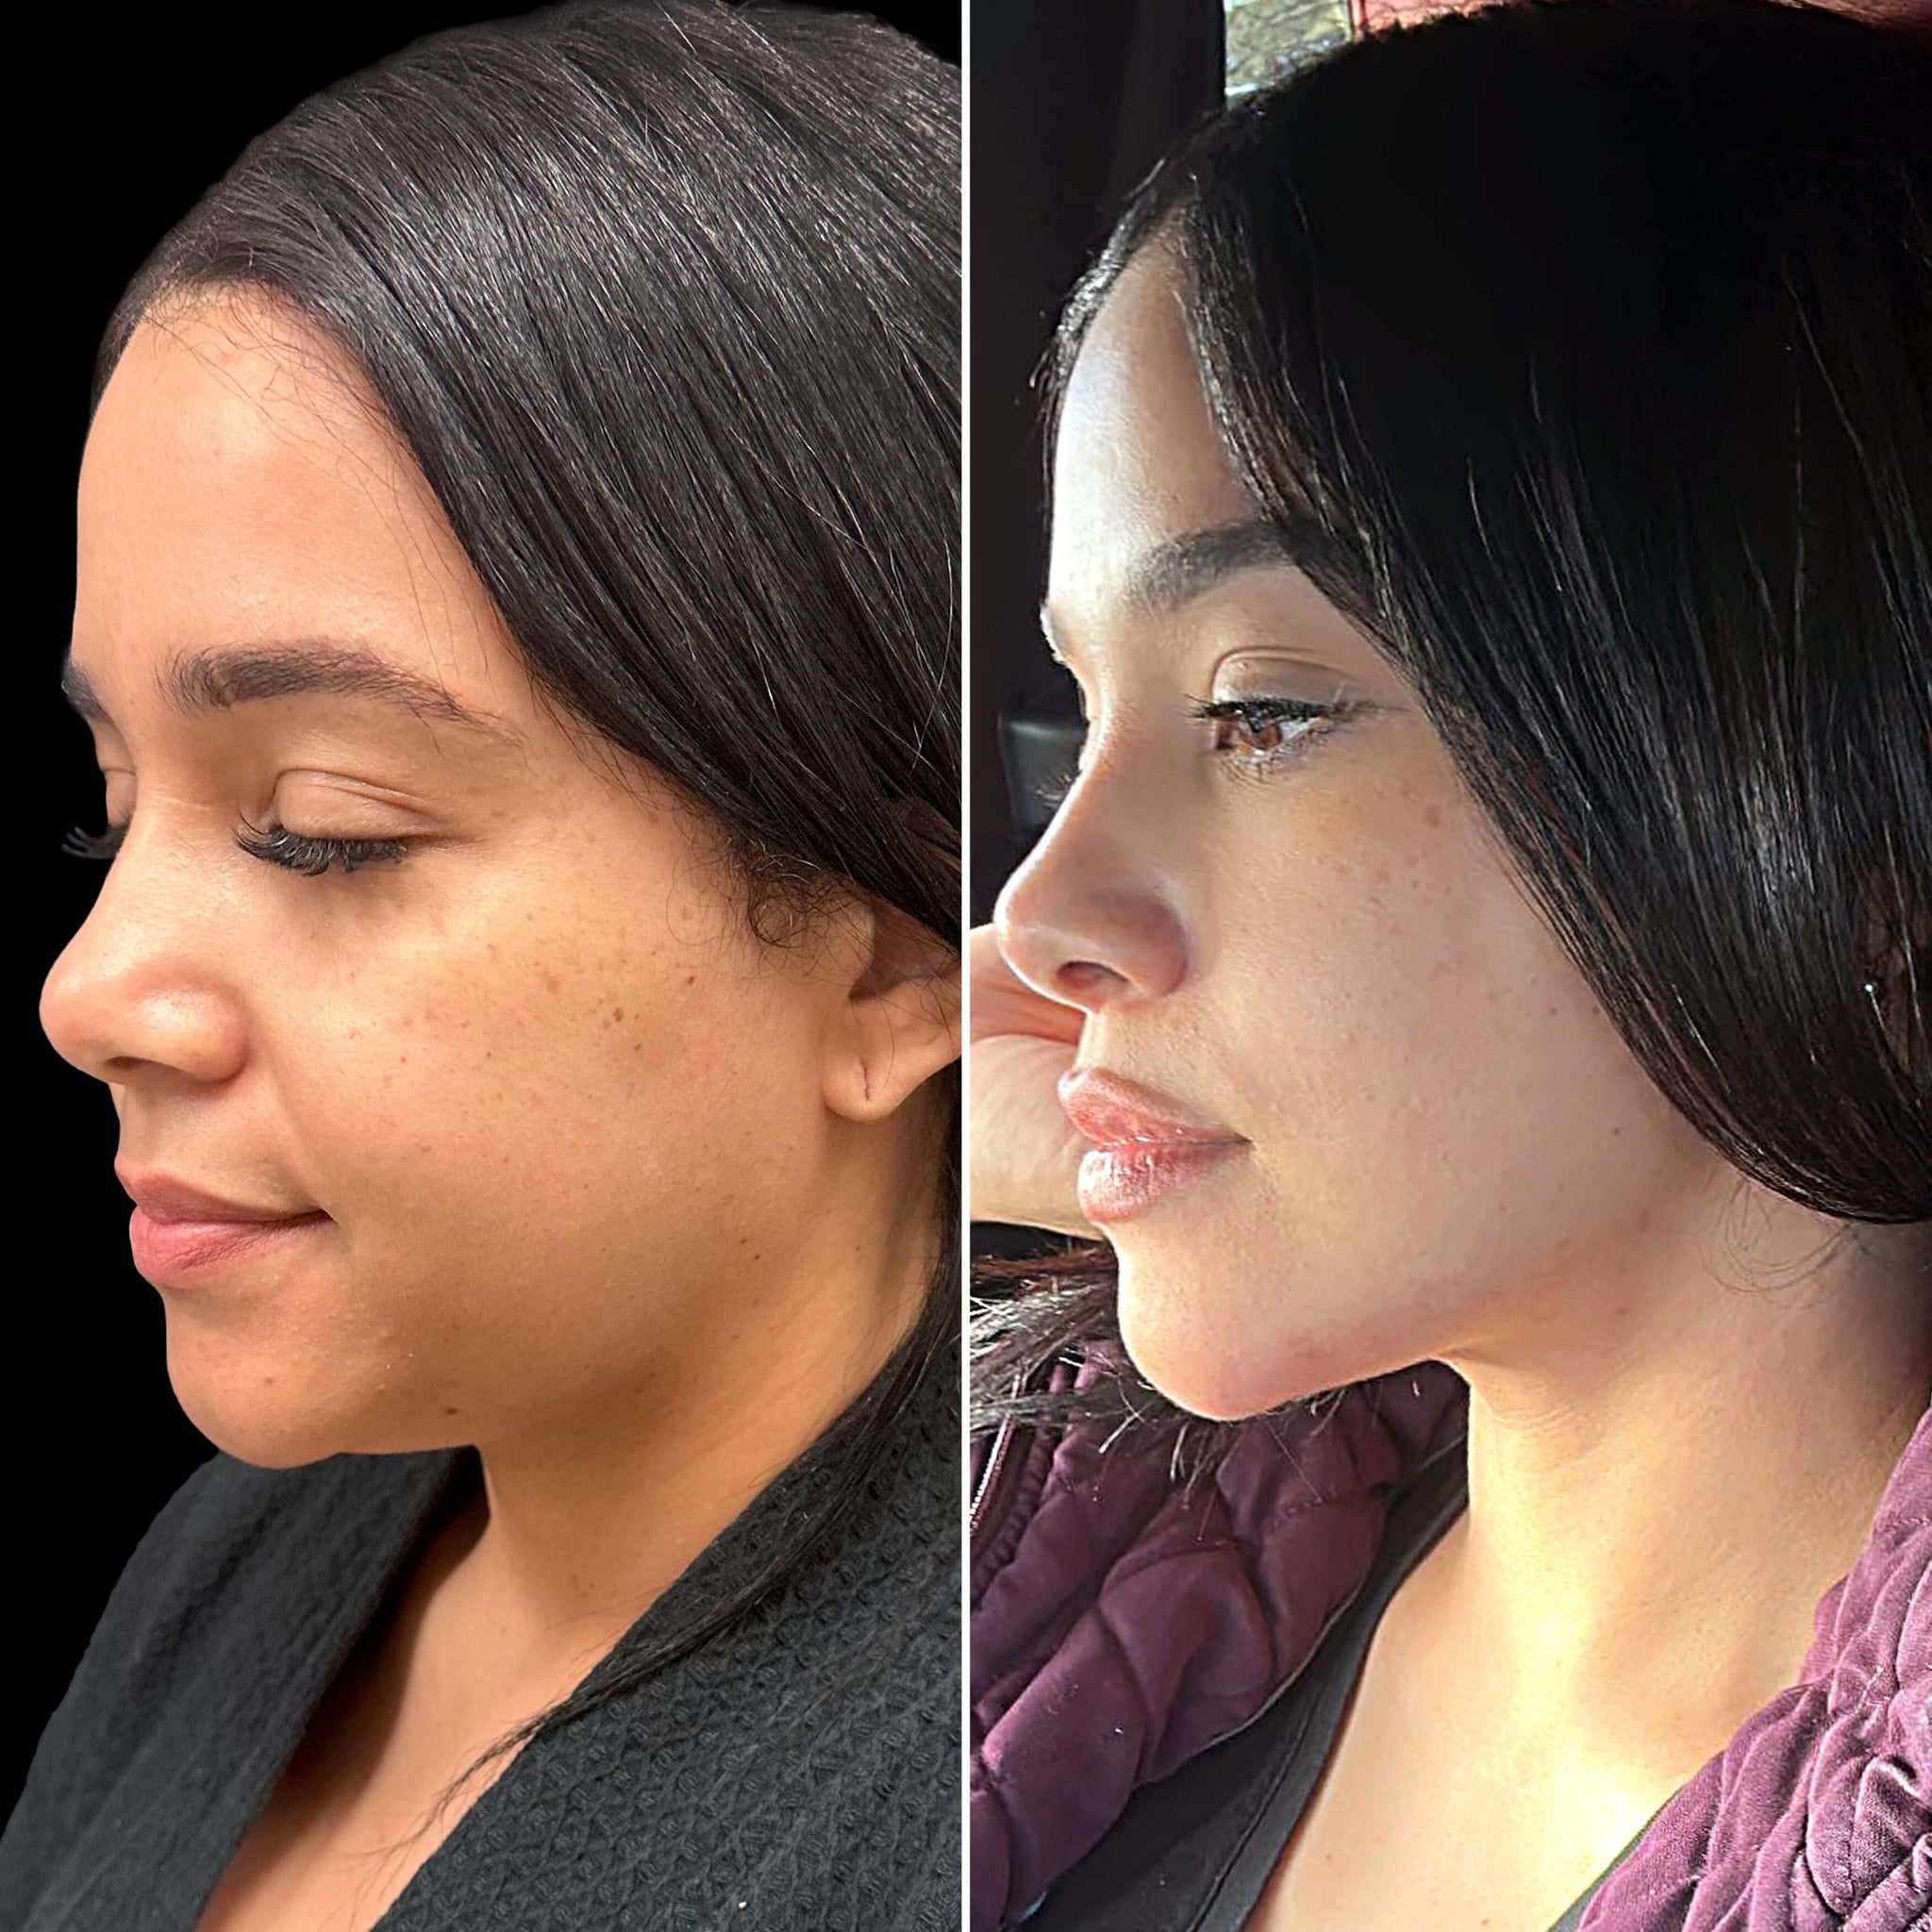 ChinFix: Liposuction – Beauty Fix MedSpa